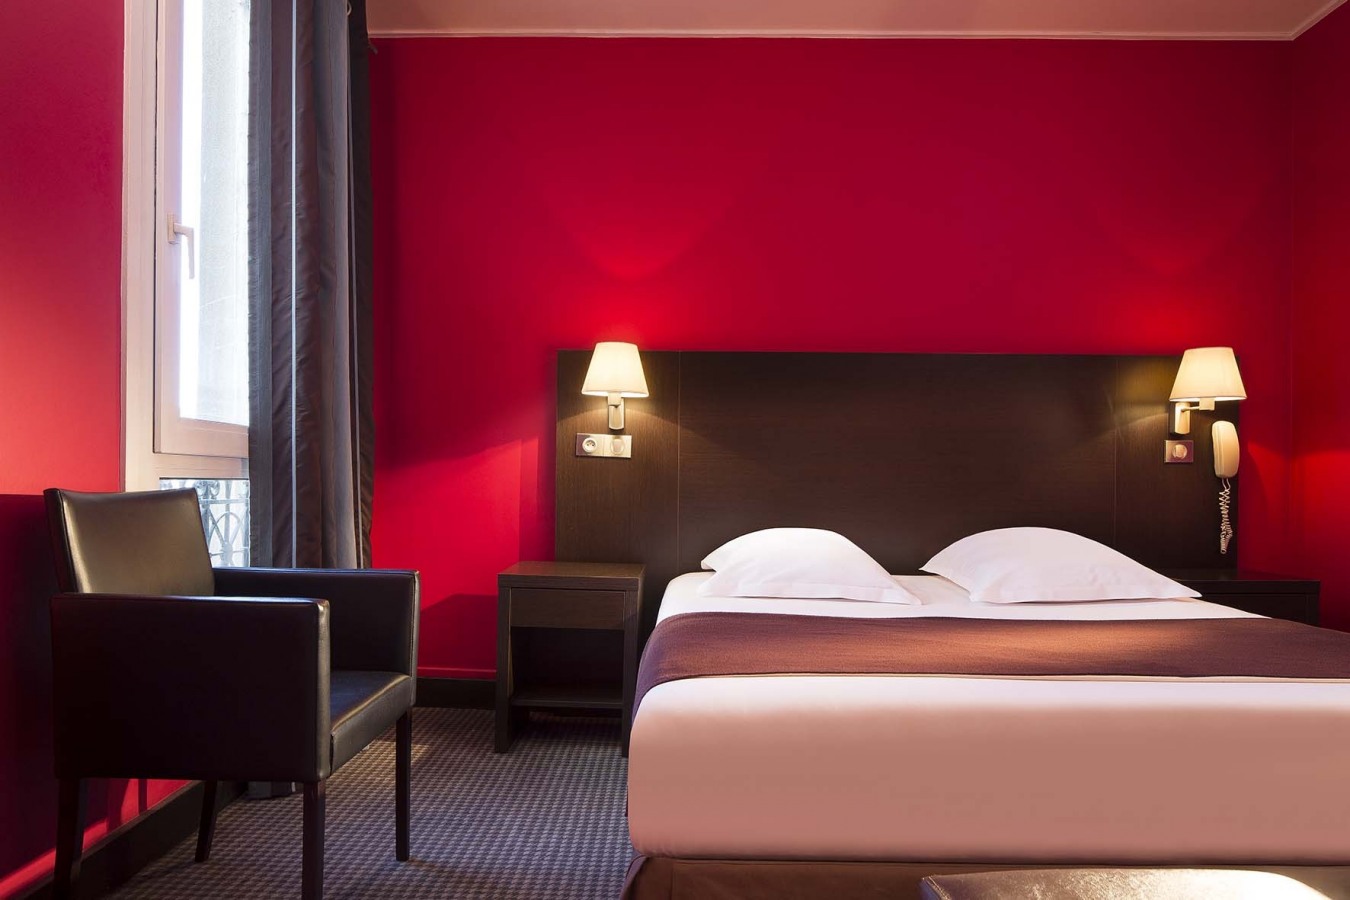 Hotel Sophie Germain - Mentions légales